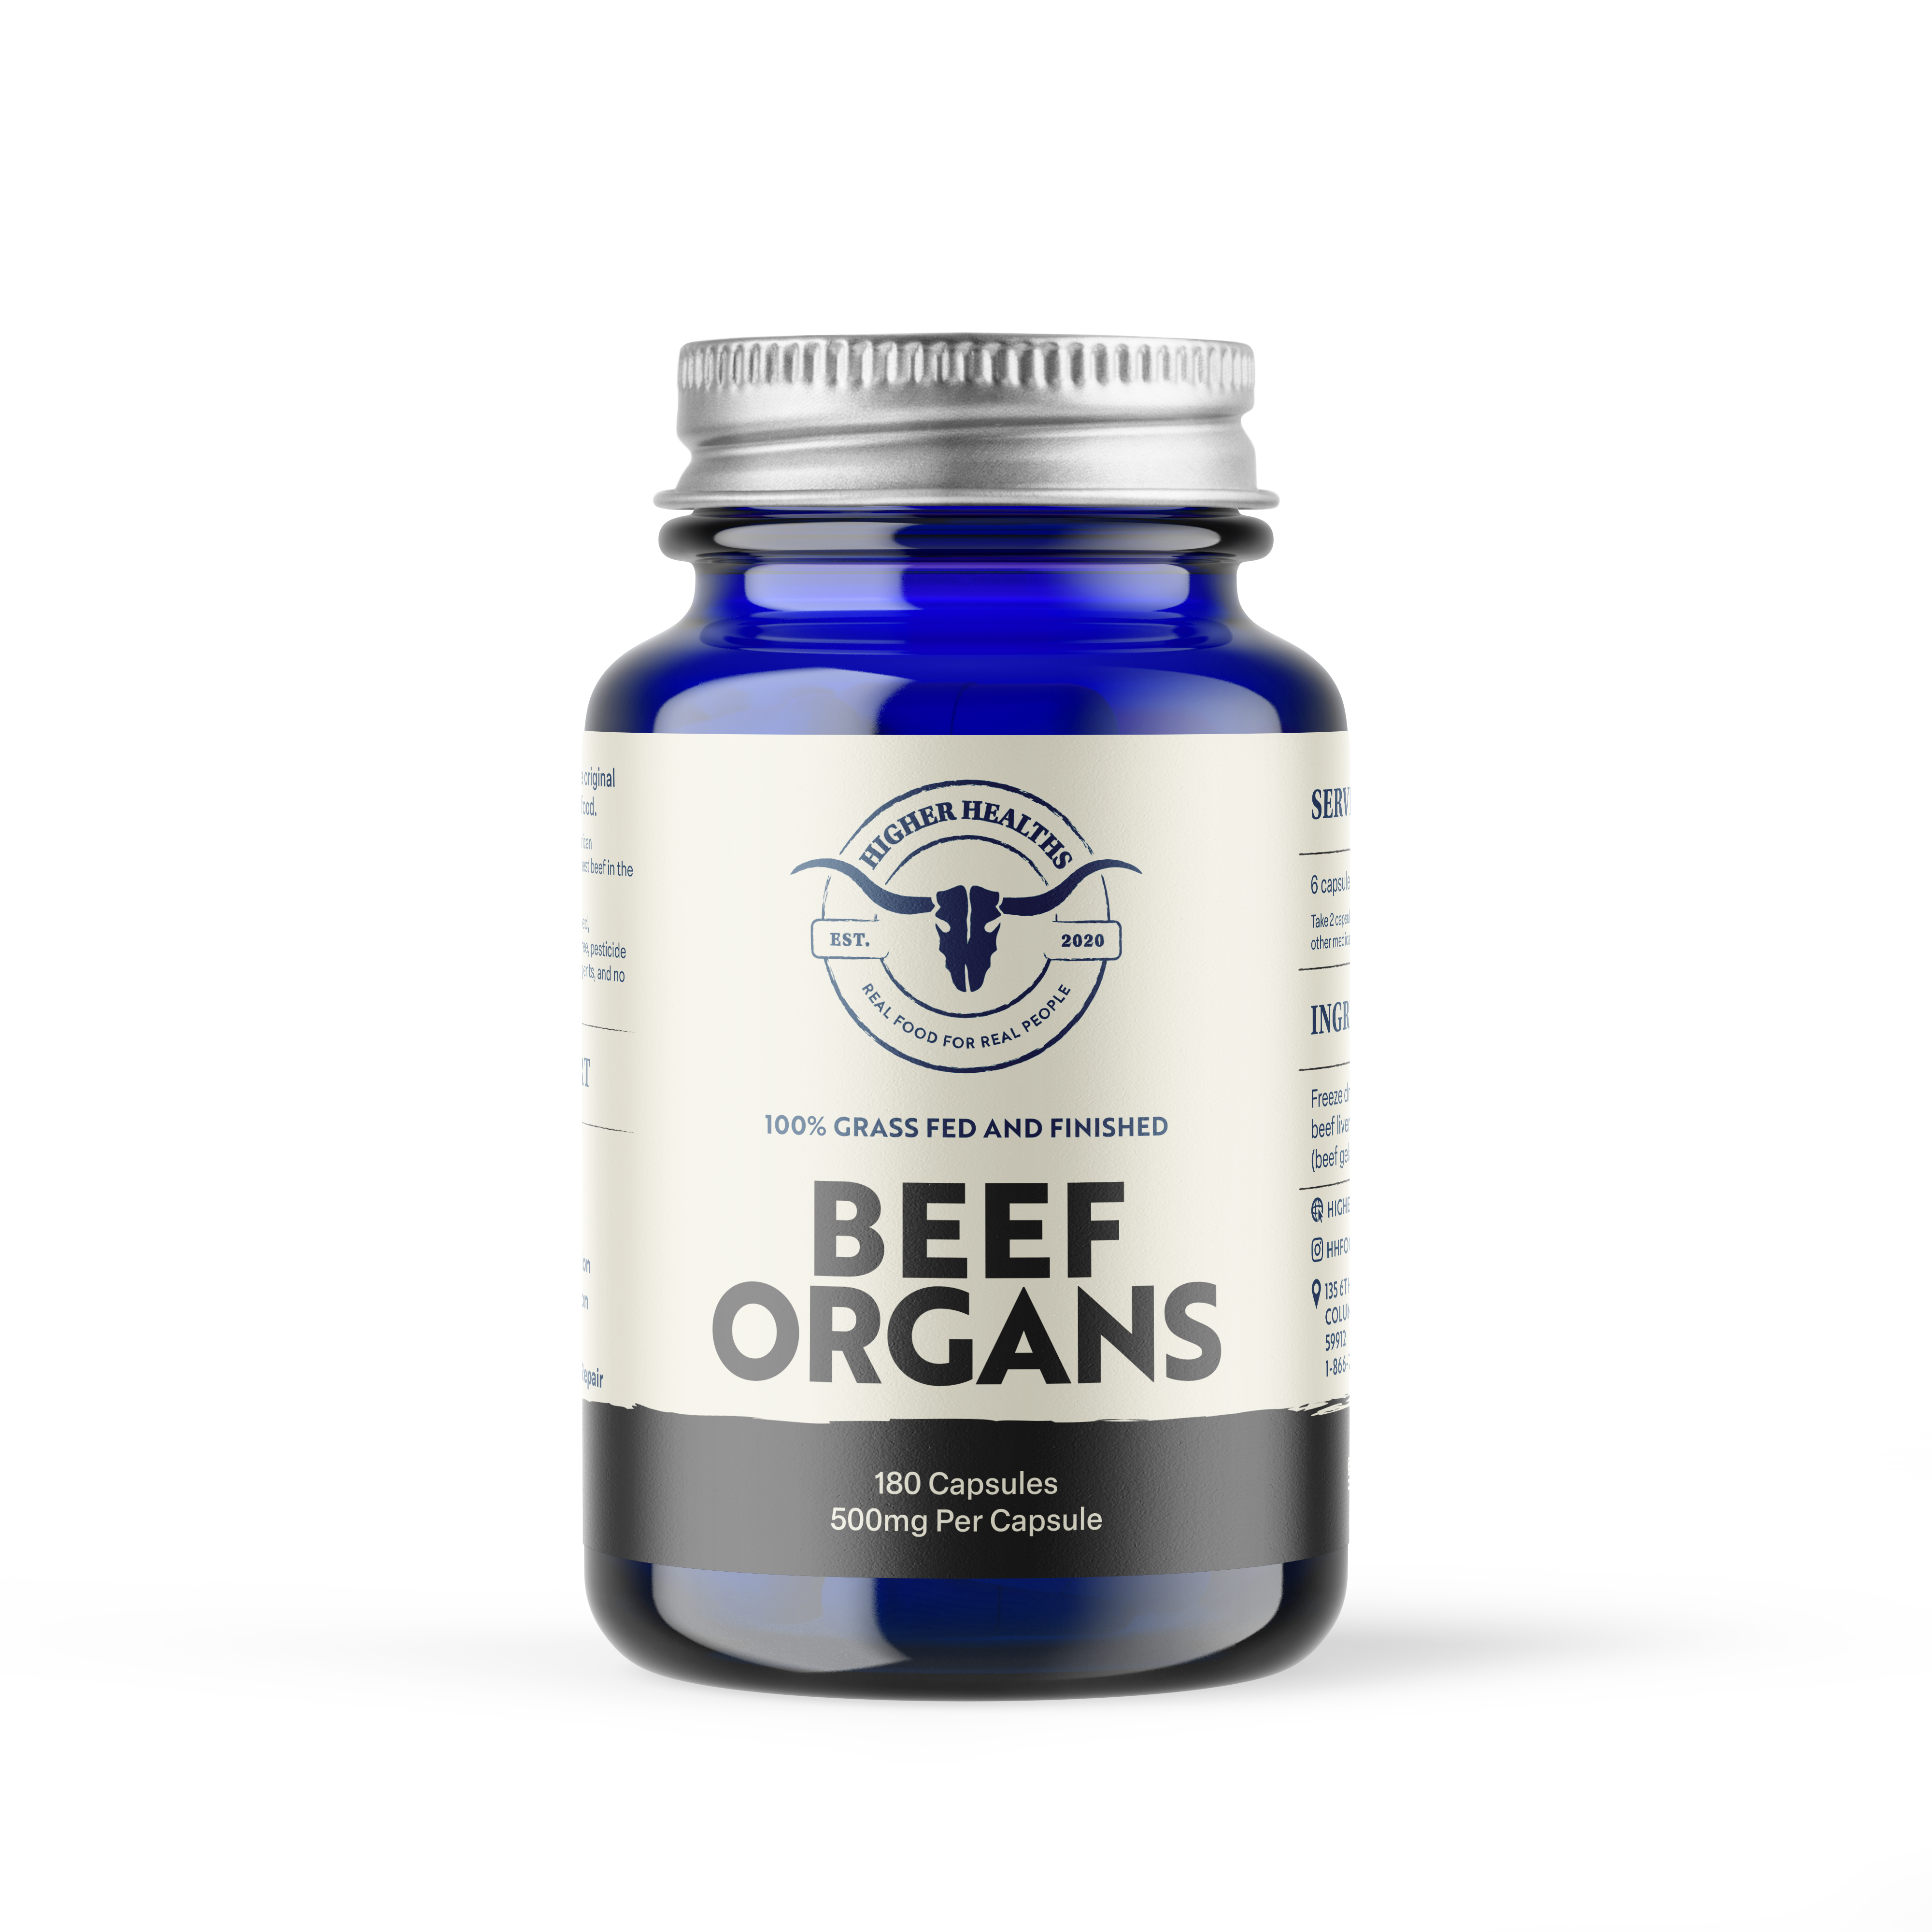 2 Pack Beef Organs - The Everything Capsule